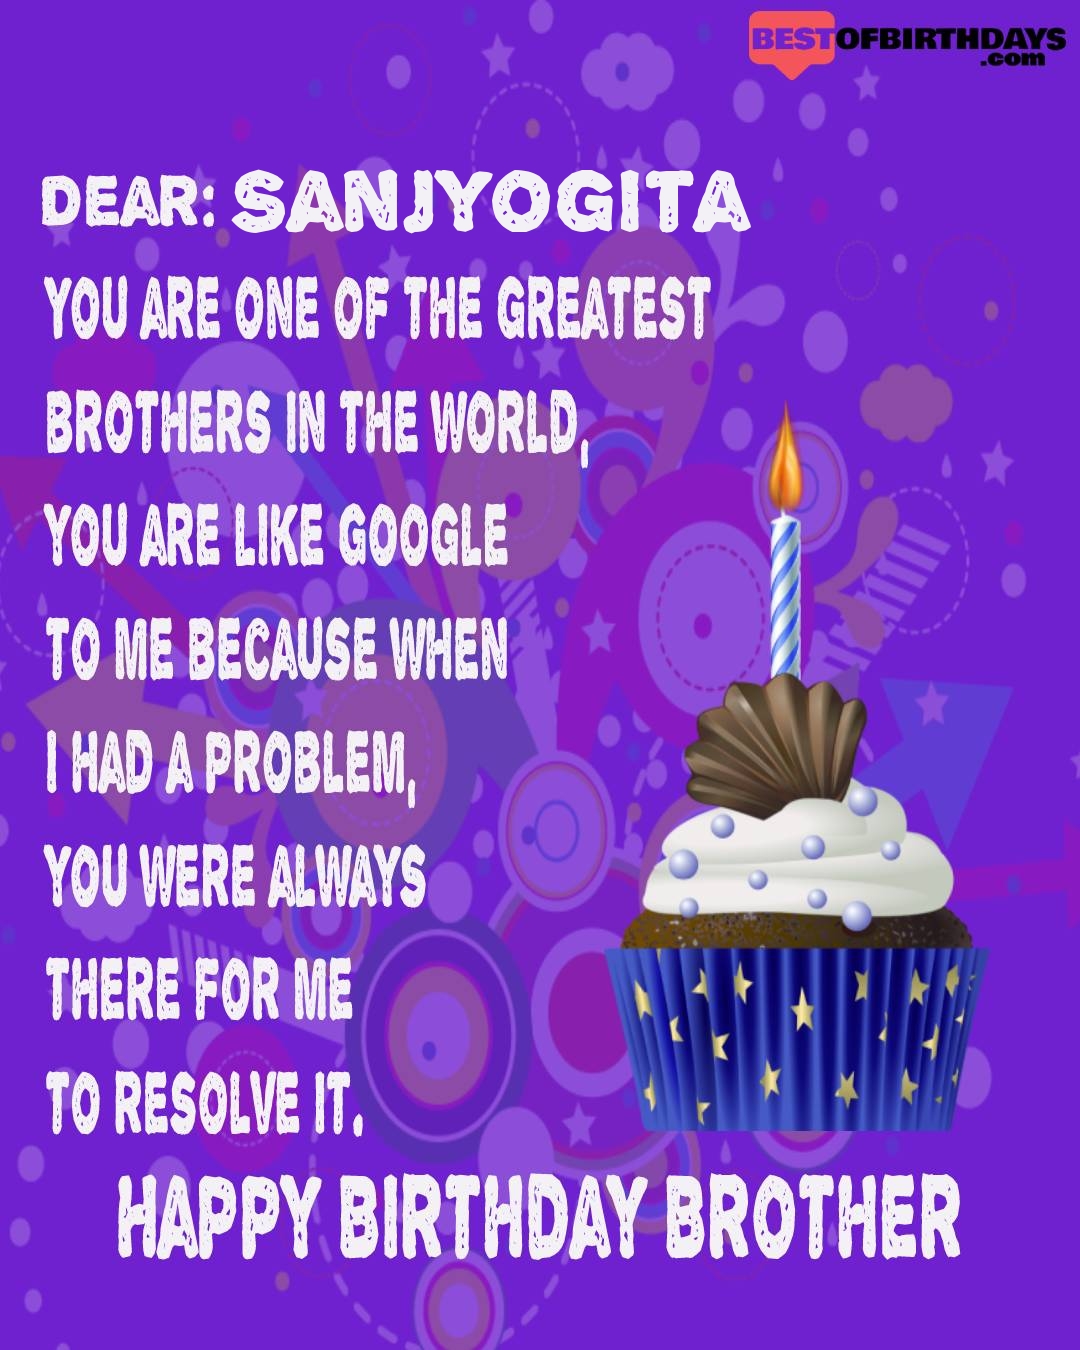 Happy birthday sanjyogita bhai brother bro